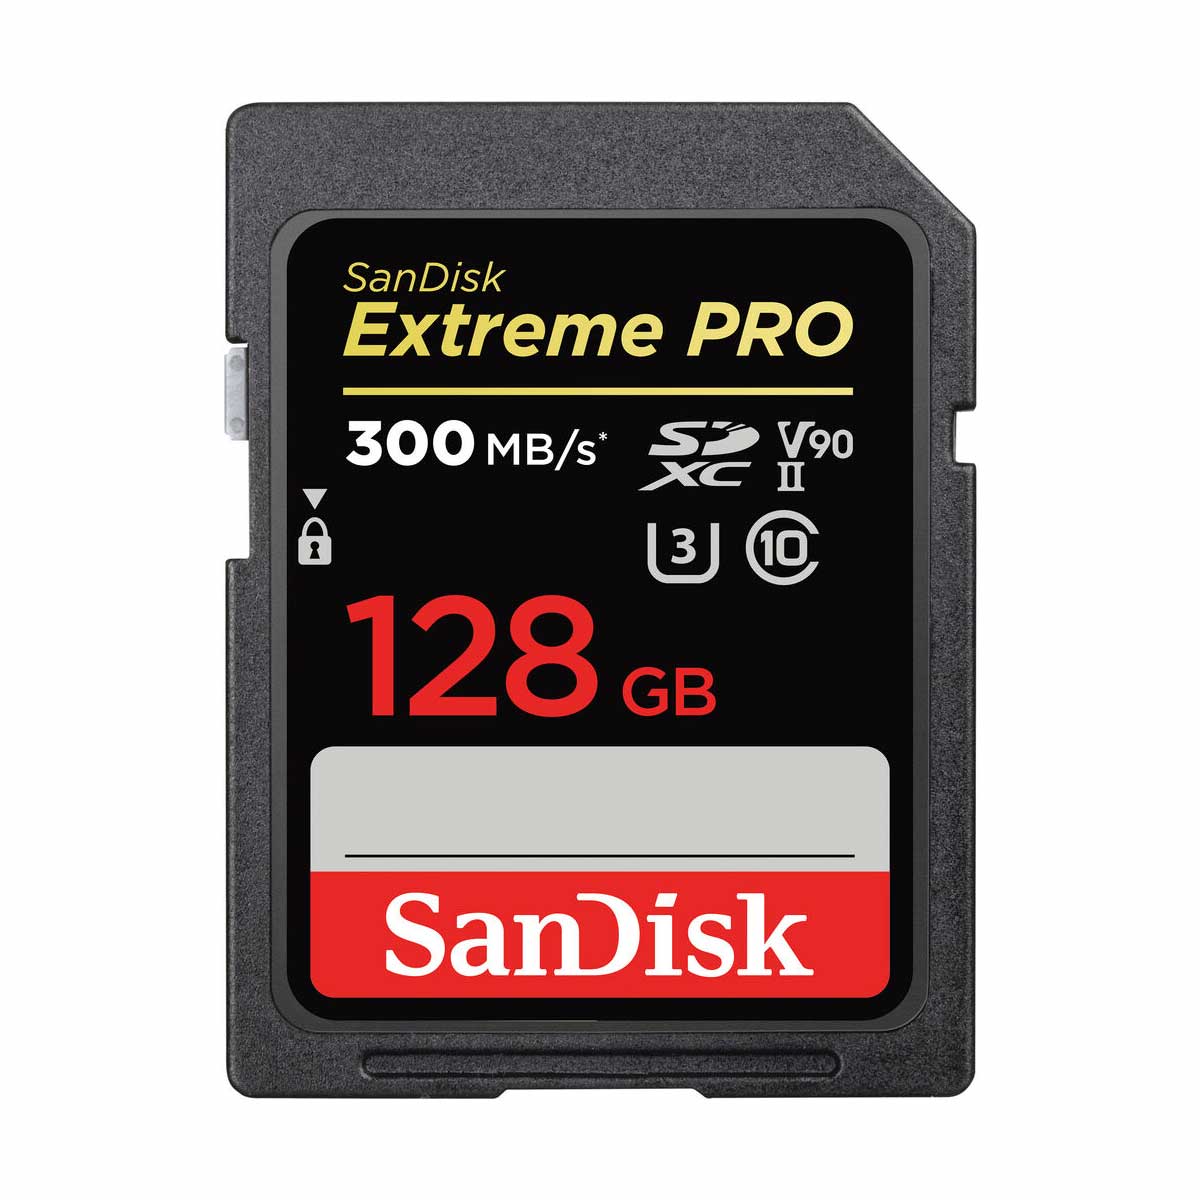 SanDisk 128GB Extreme PRO UHS-II SDXC (V90) Memory Card 300 MB/s